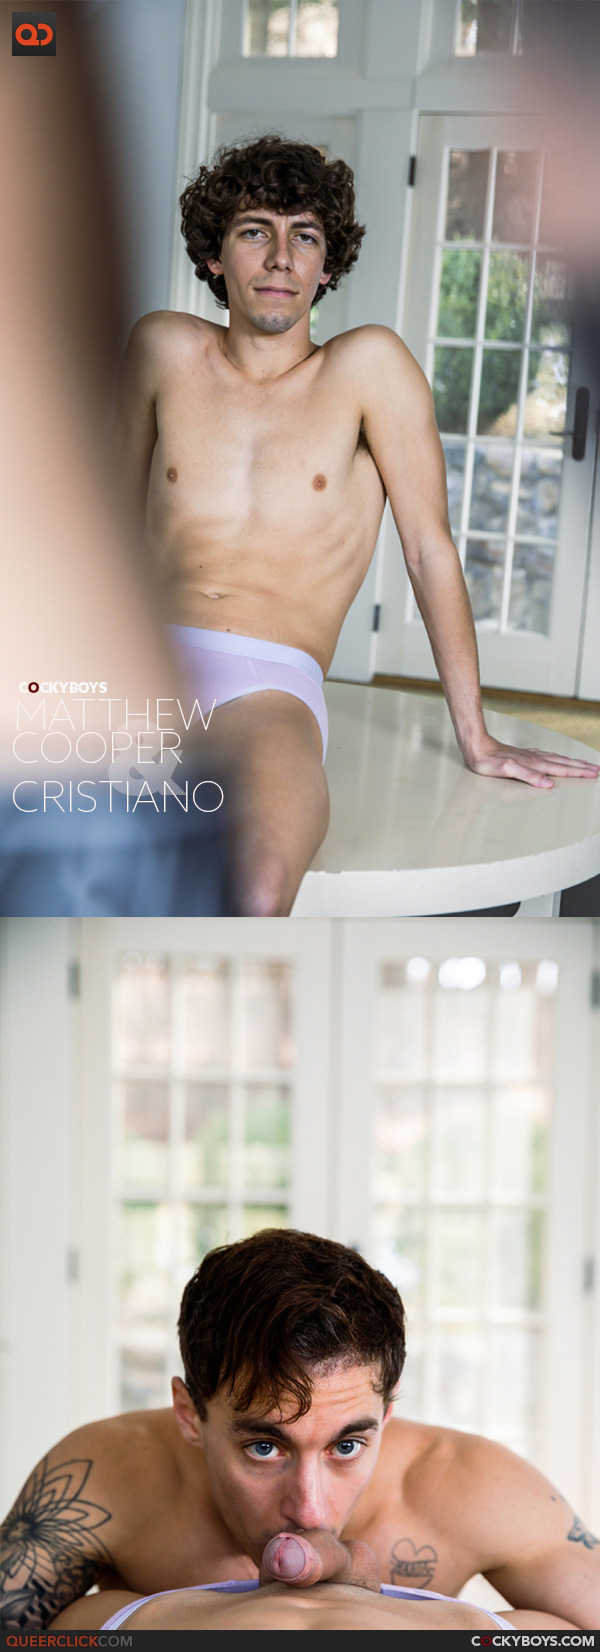 CockyBoys: Cristiano and Matthew Cooper